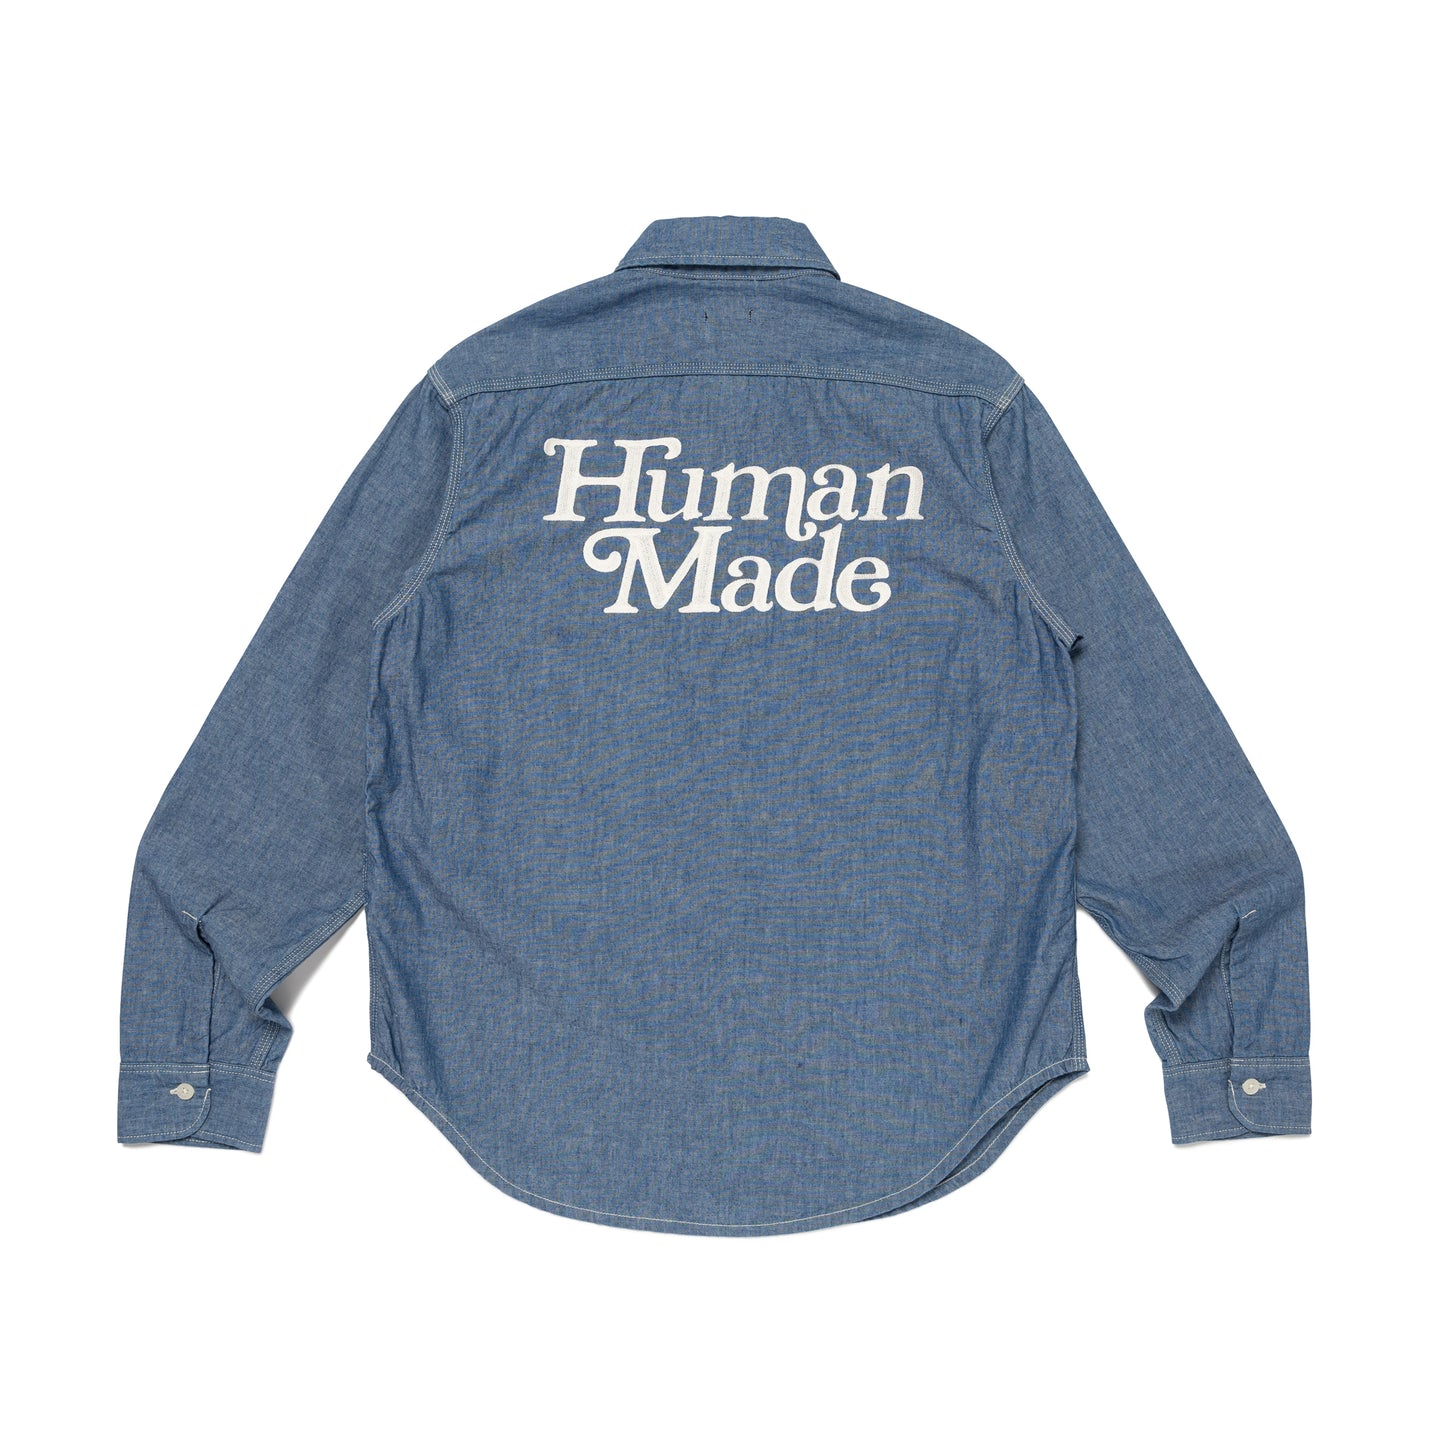 Human Made - Chambray Work Shirtよろしくお願いいたします